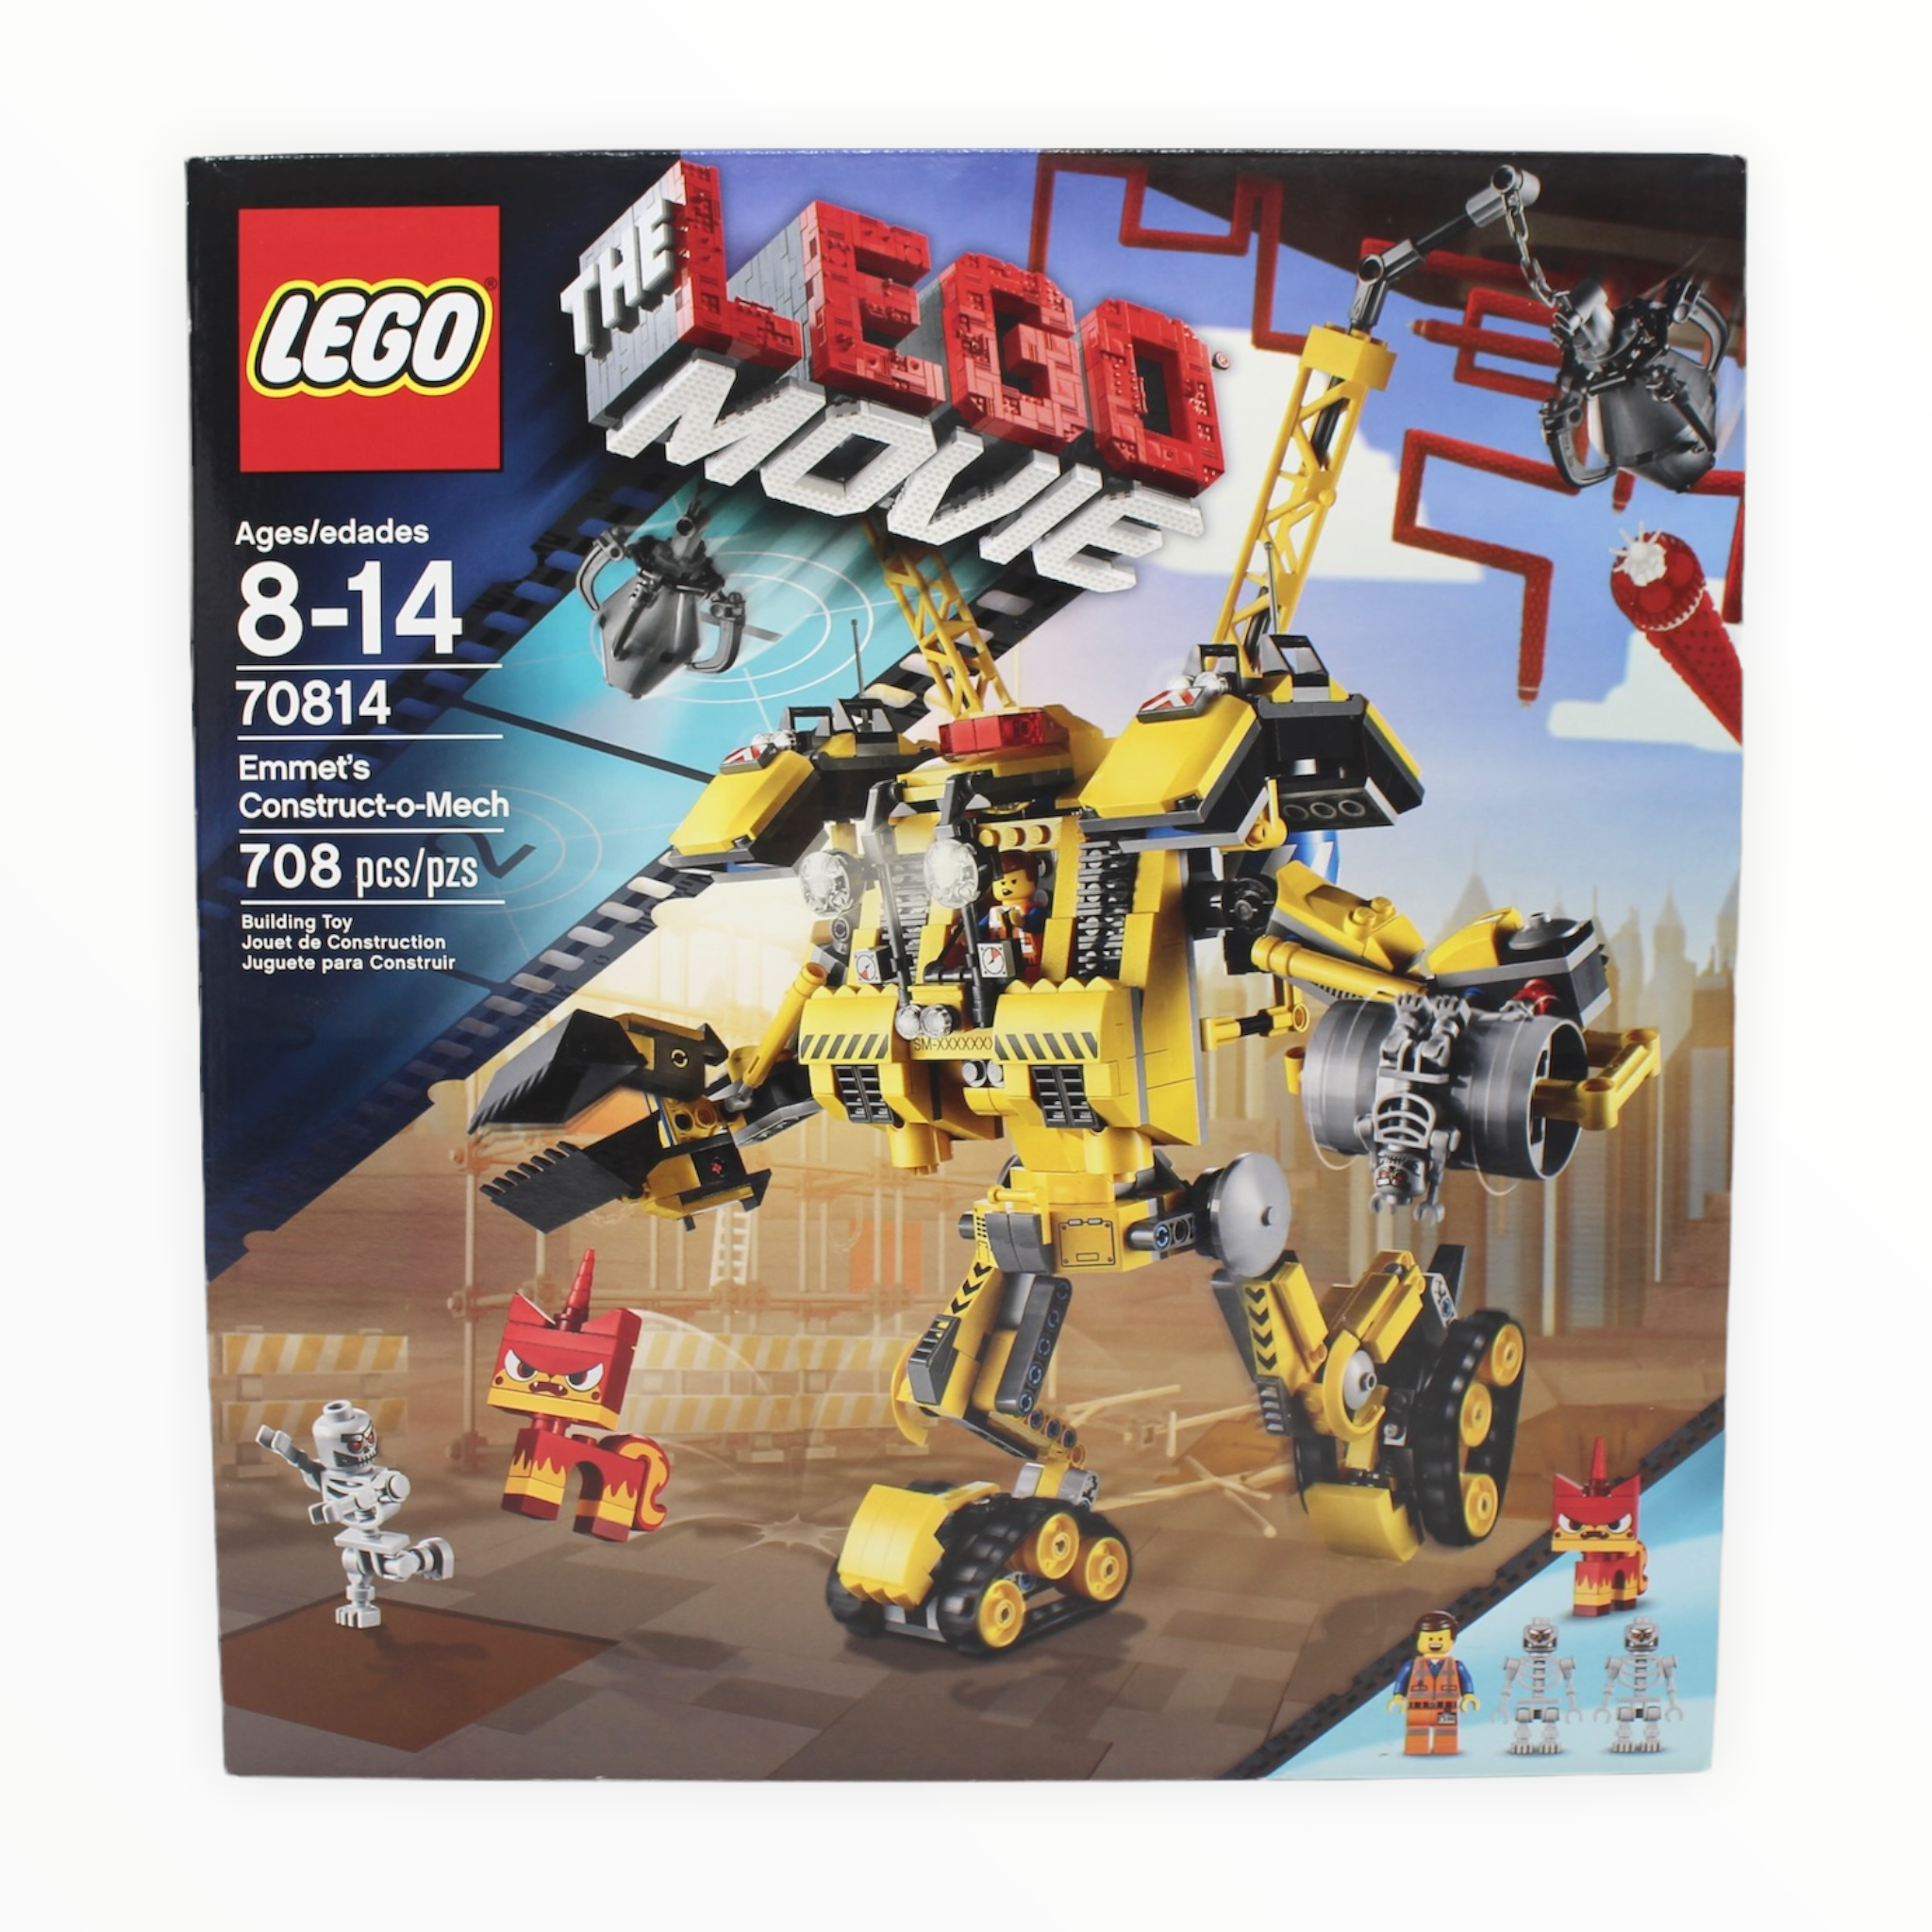 Retired Set 70814 The LEGO Movie Emmet’s Construct-o-Mech